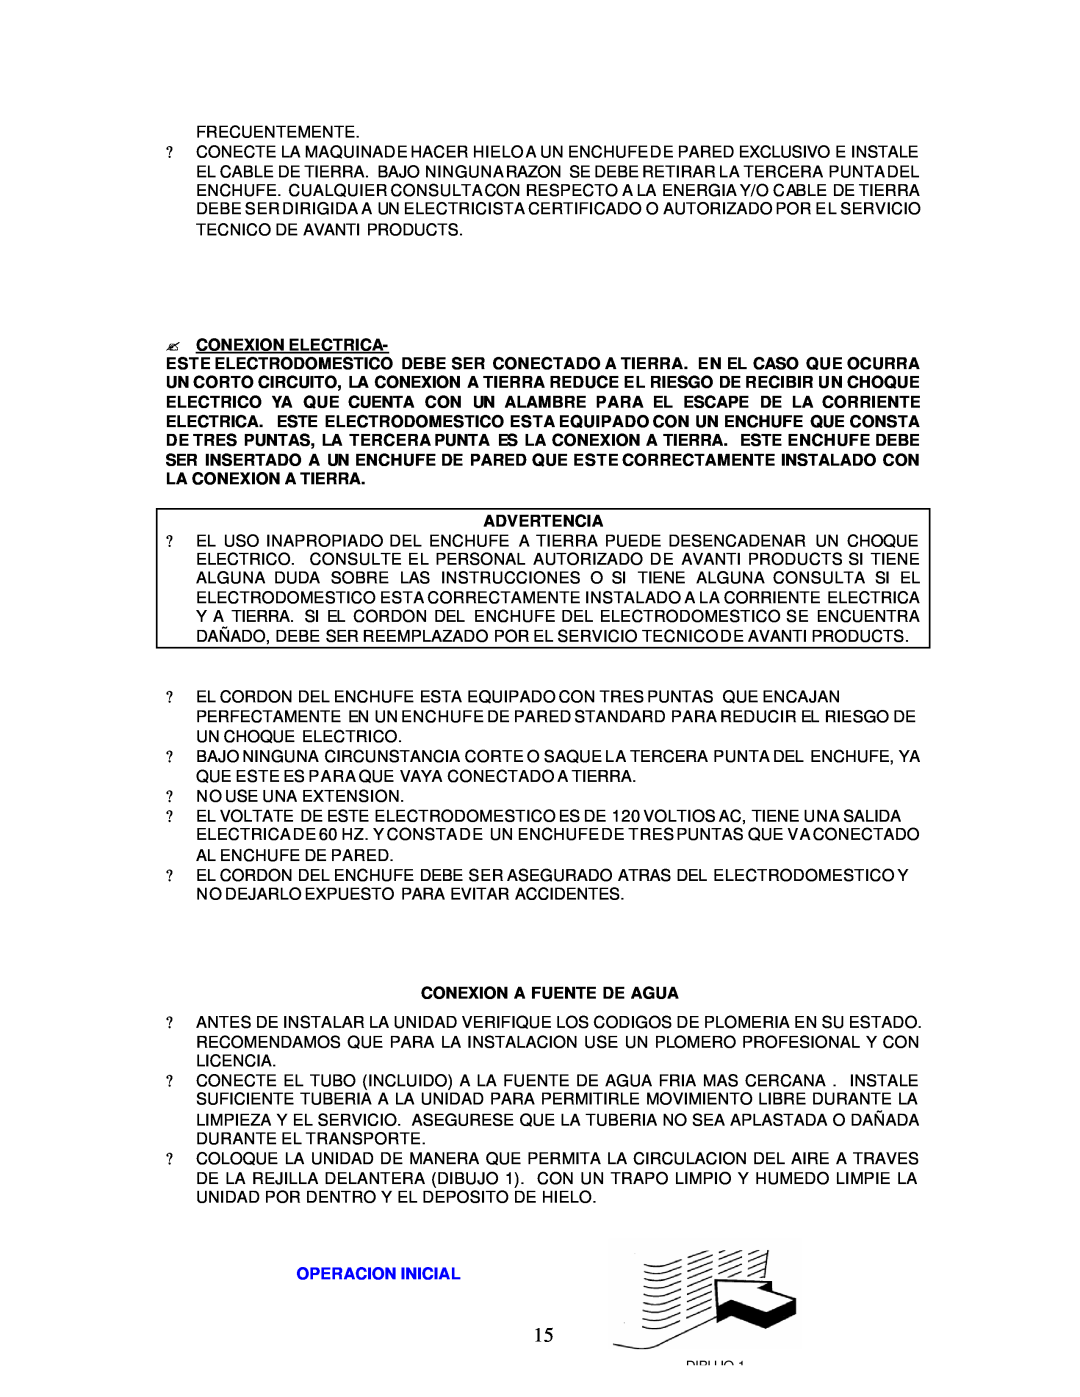 Avanti IM20SS instruction manual ?Conexion Electrica, Advertencia, Conexion A Fuente De Agua, Operacion Inicial 